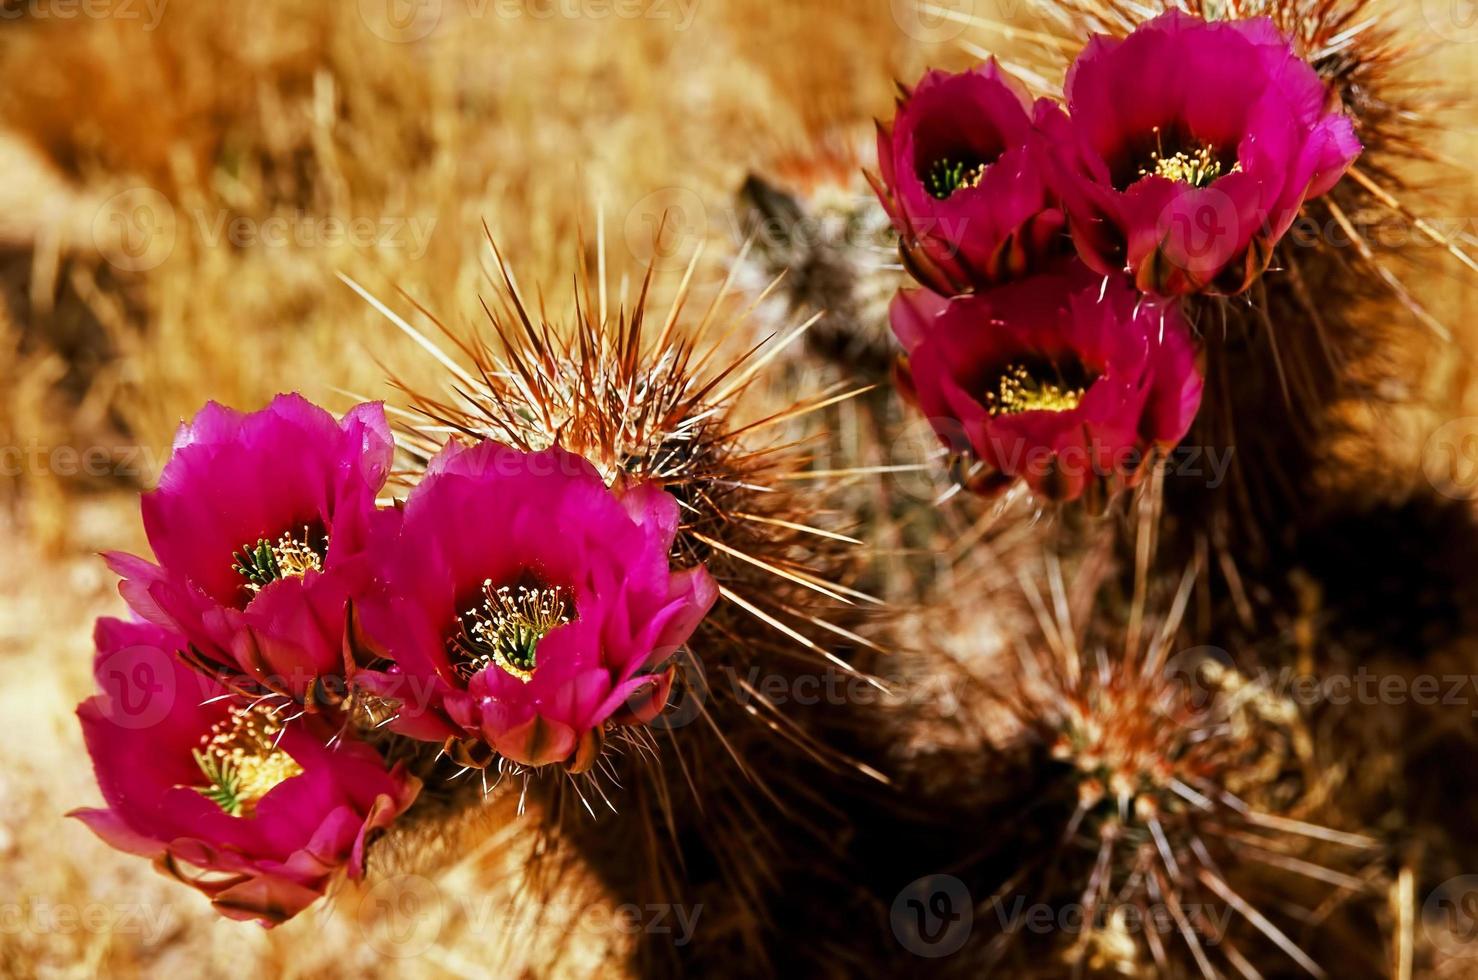 Flowering Hedge Hog cactus photo